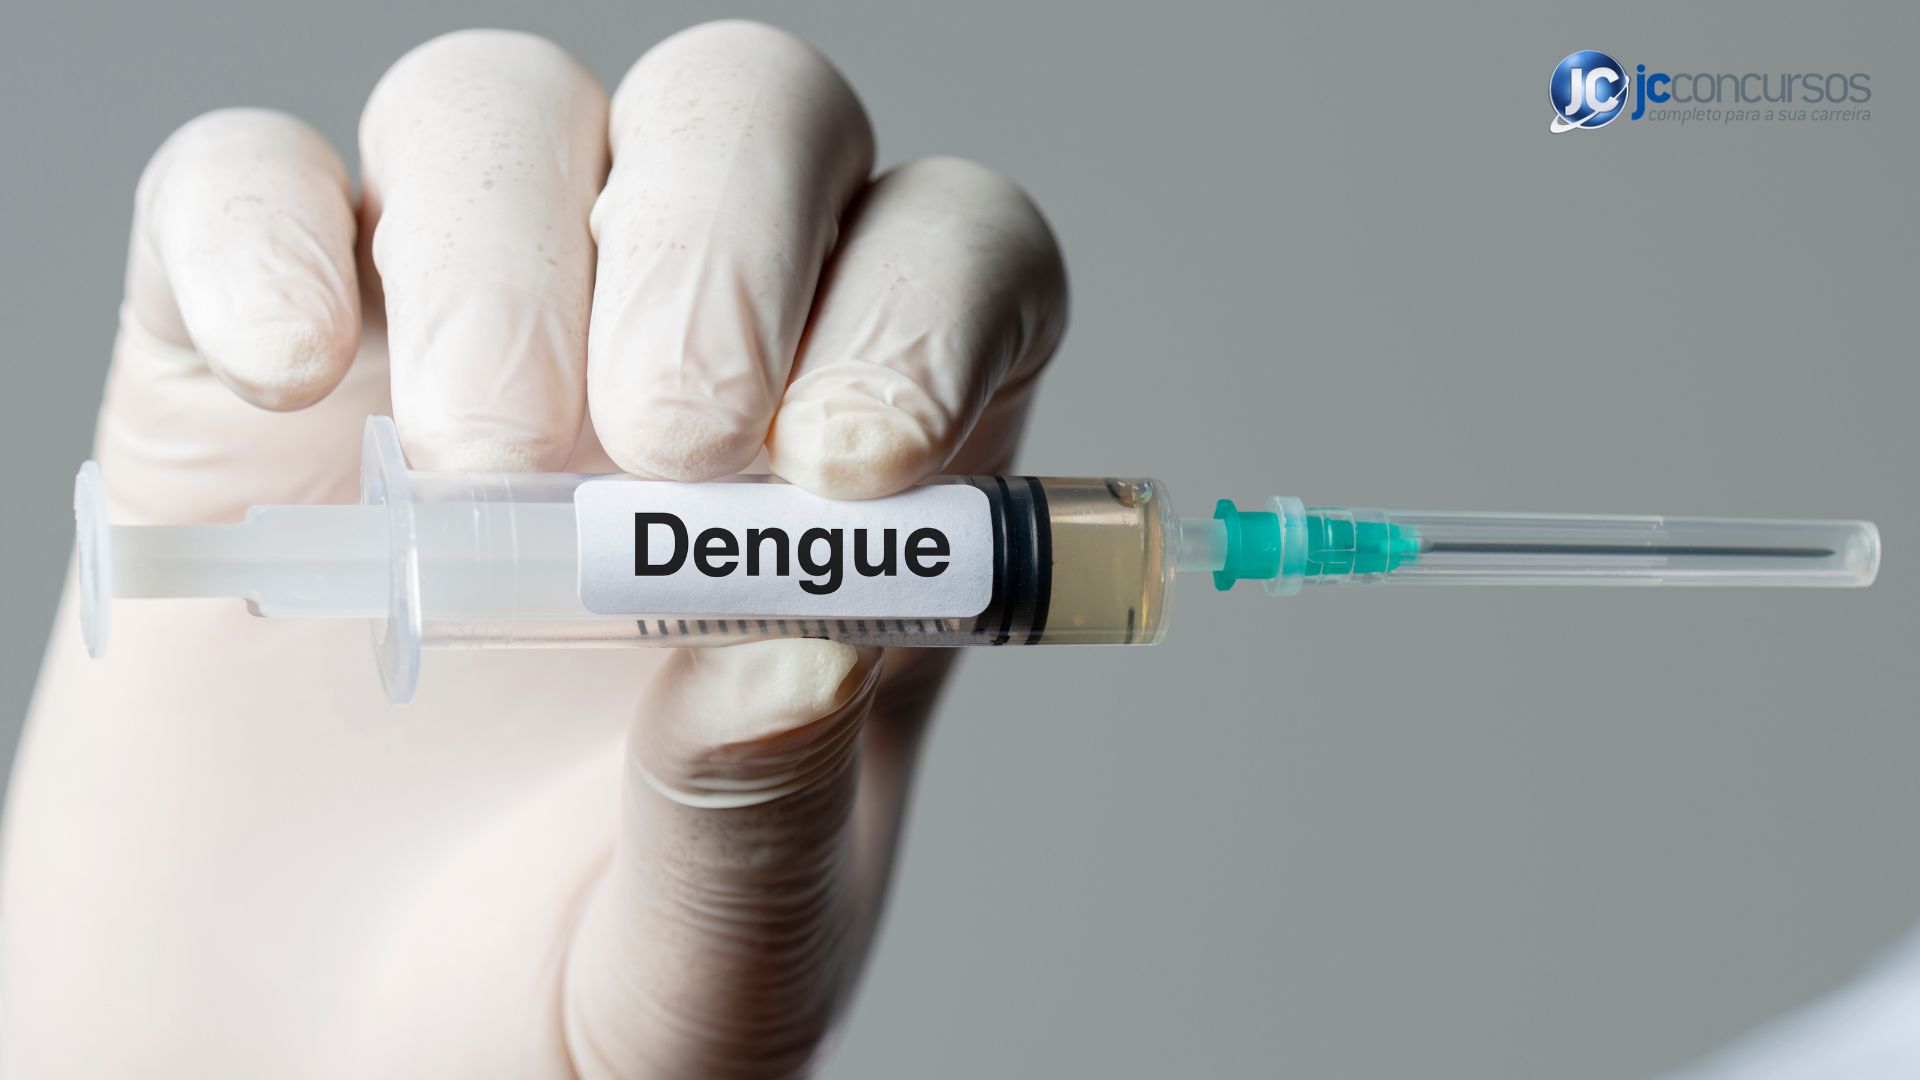 vacina contra a dengue divulgacao jc concursos